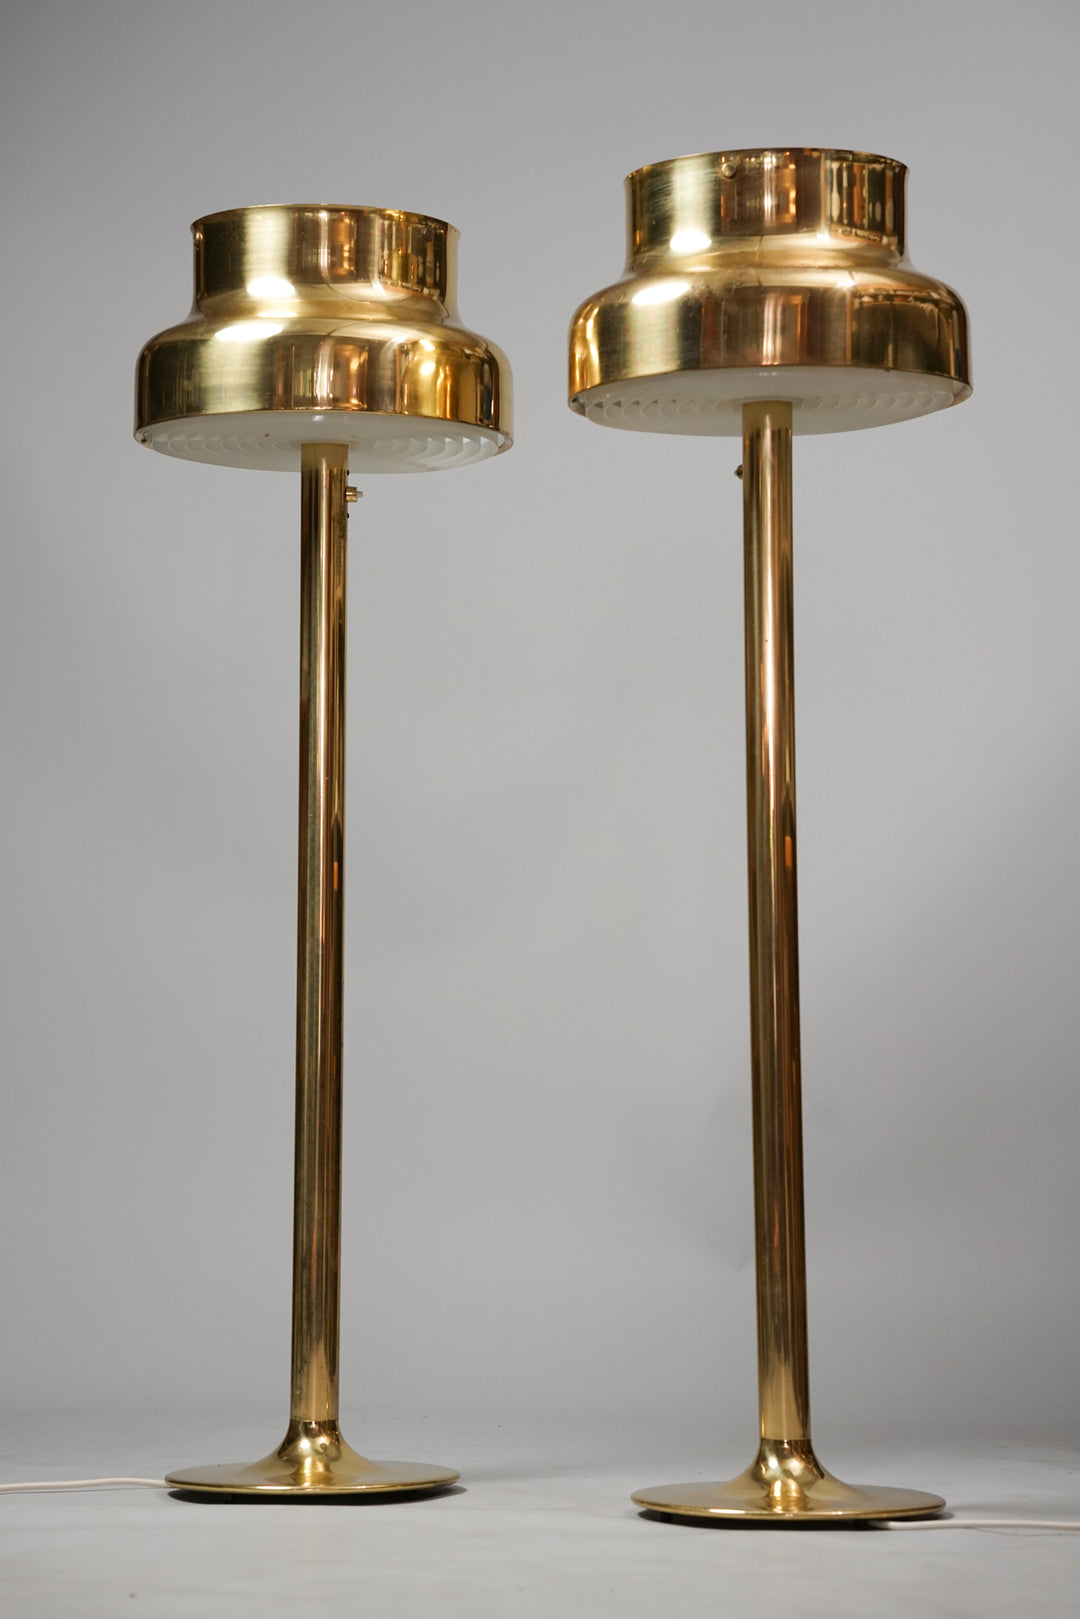 Floor lamp (2 pieces), "Bumling", Anders Pehrson, Ateljé Lyktan, mid 1900s